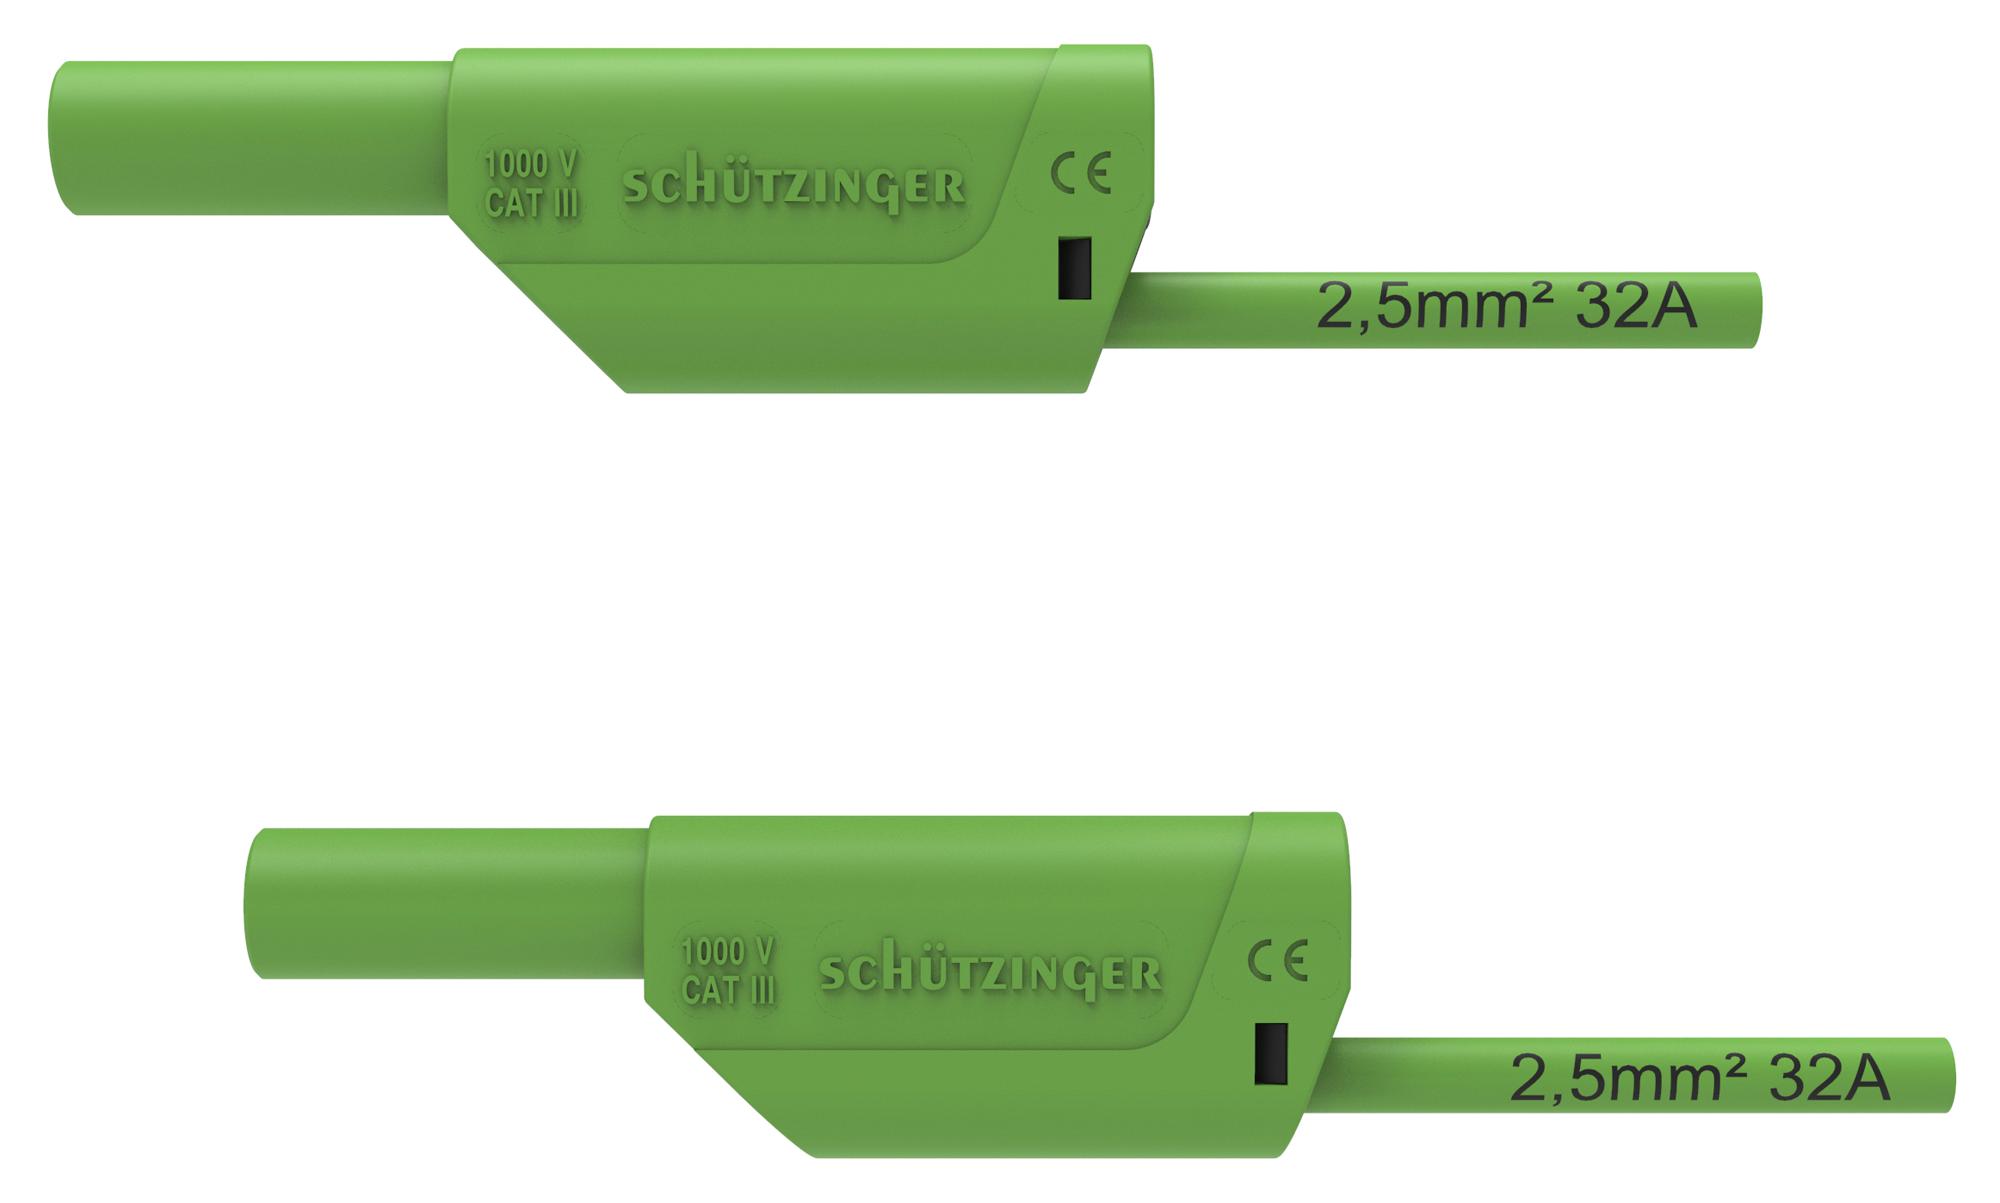 Schutzinger Di Vsfk 8700 / 2.5 / 200 / Gn 4mm Banana Plug-Sq, Shrouded, Green, 2M